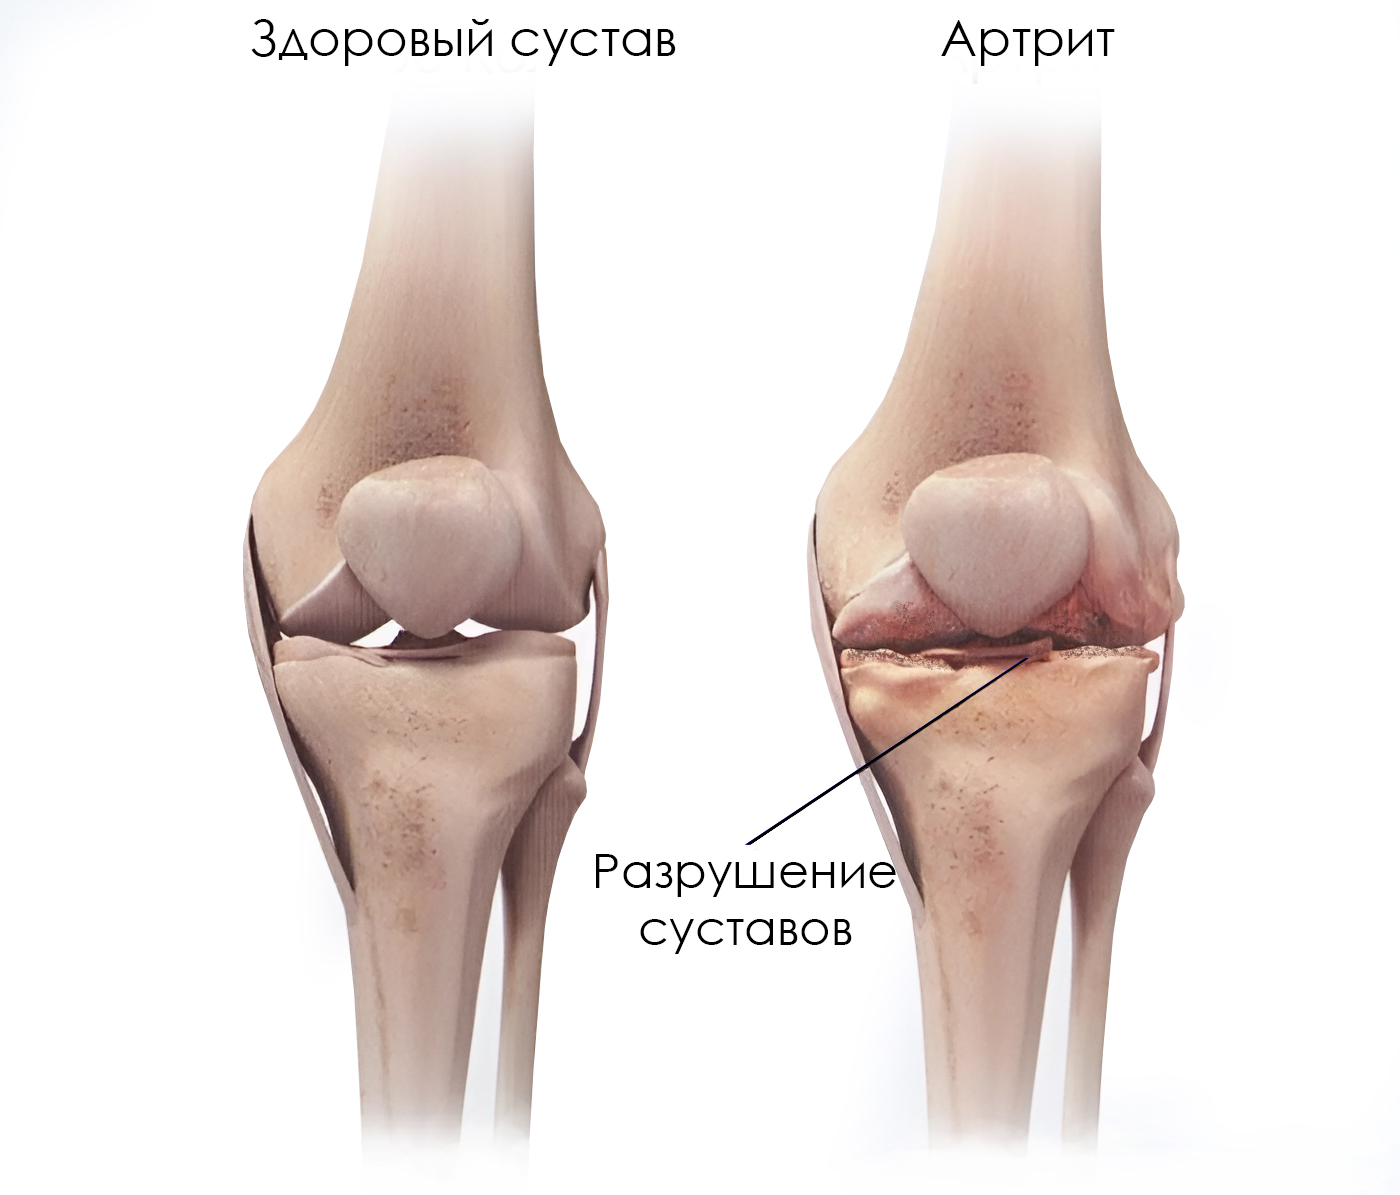 Сустав 1а. Ревматоидный артрит коленного сустава. Ревматоидные артрит суставов колени. Ревматоидный артрит rjktyjh. Подагра коленного сустава рентген.